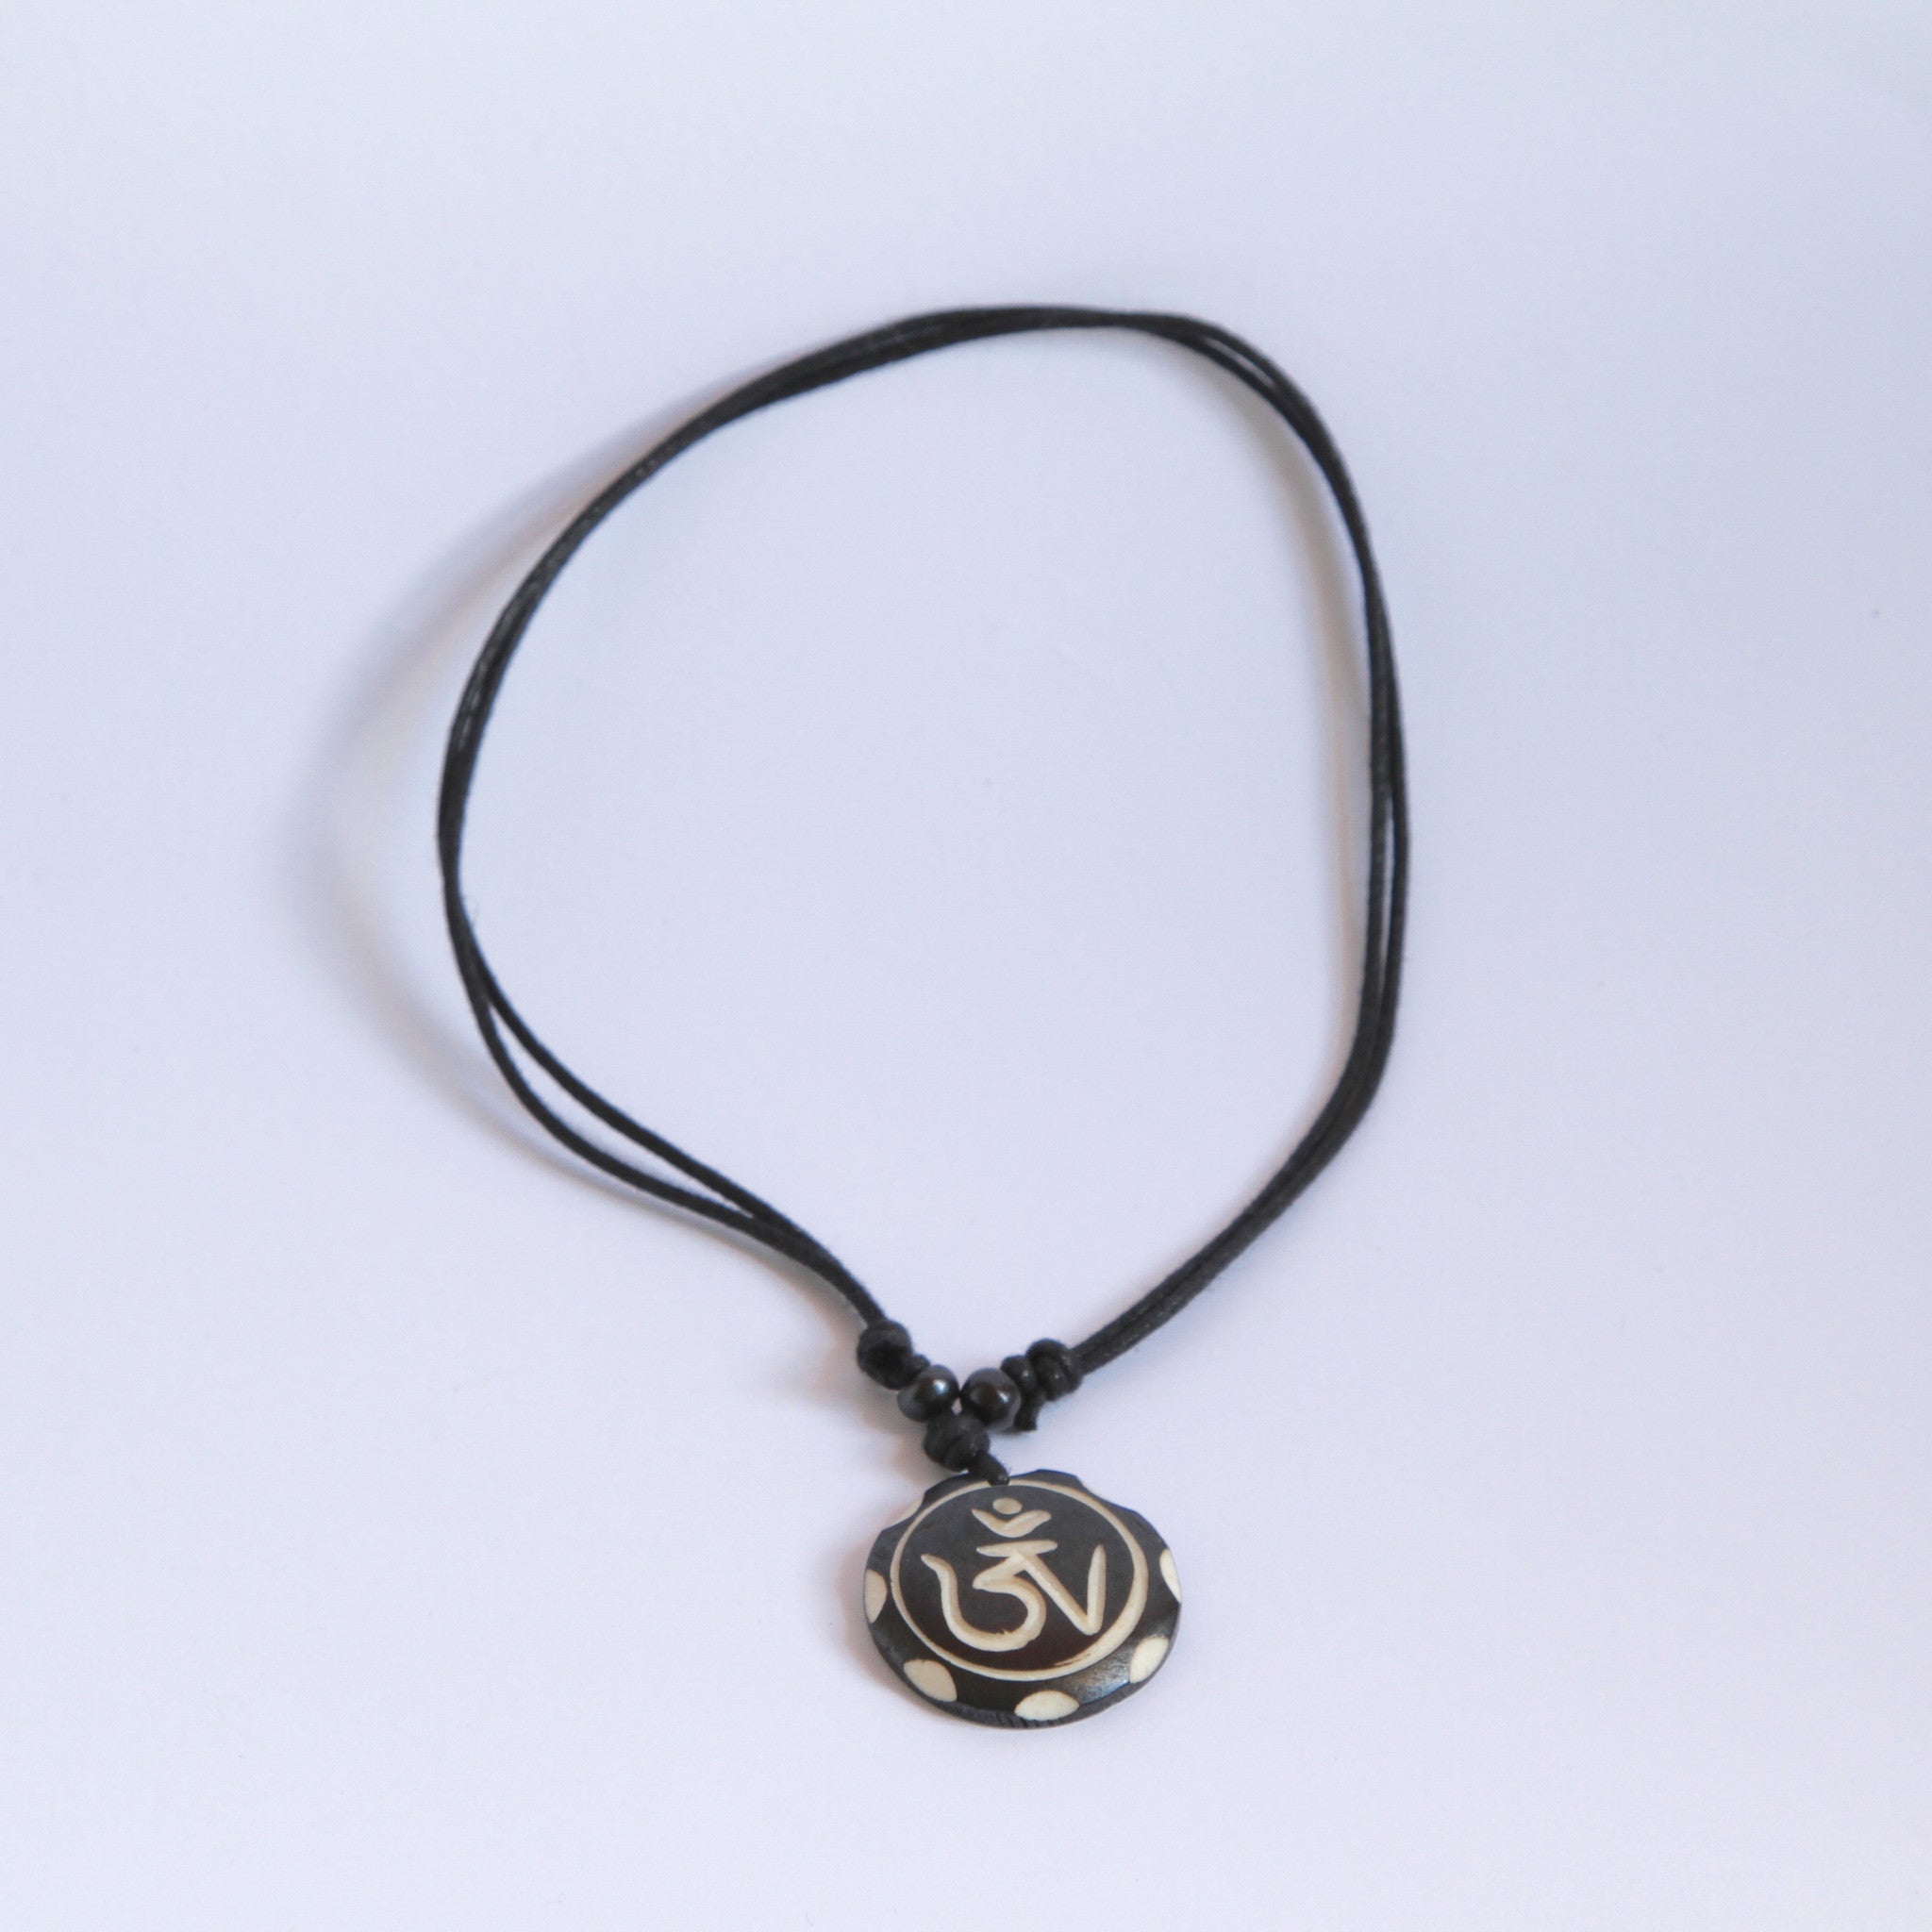 Tibetan OM - Round Pendant with Leather Loop